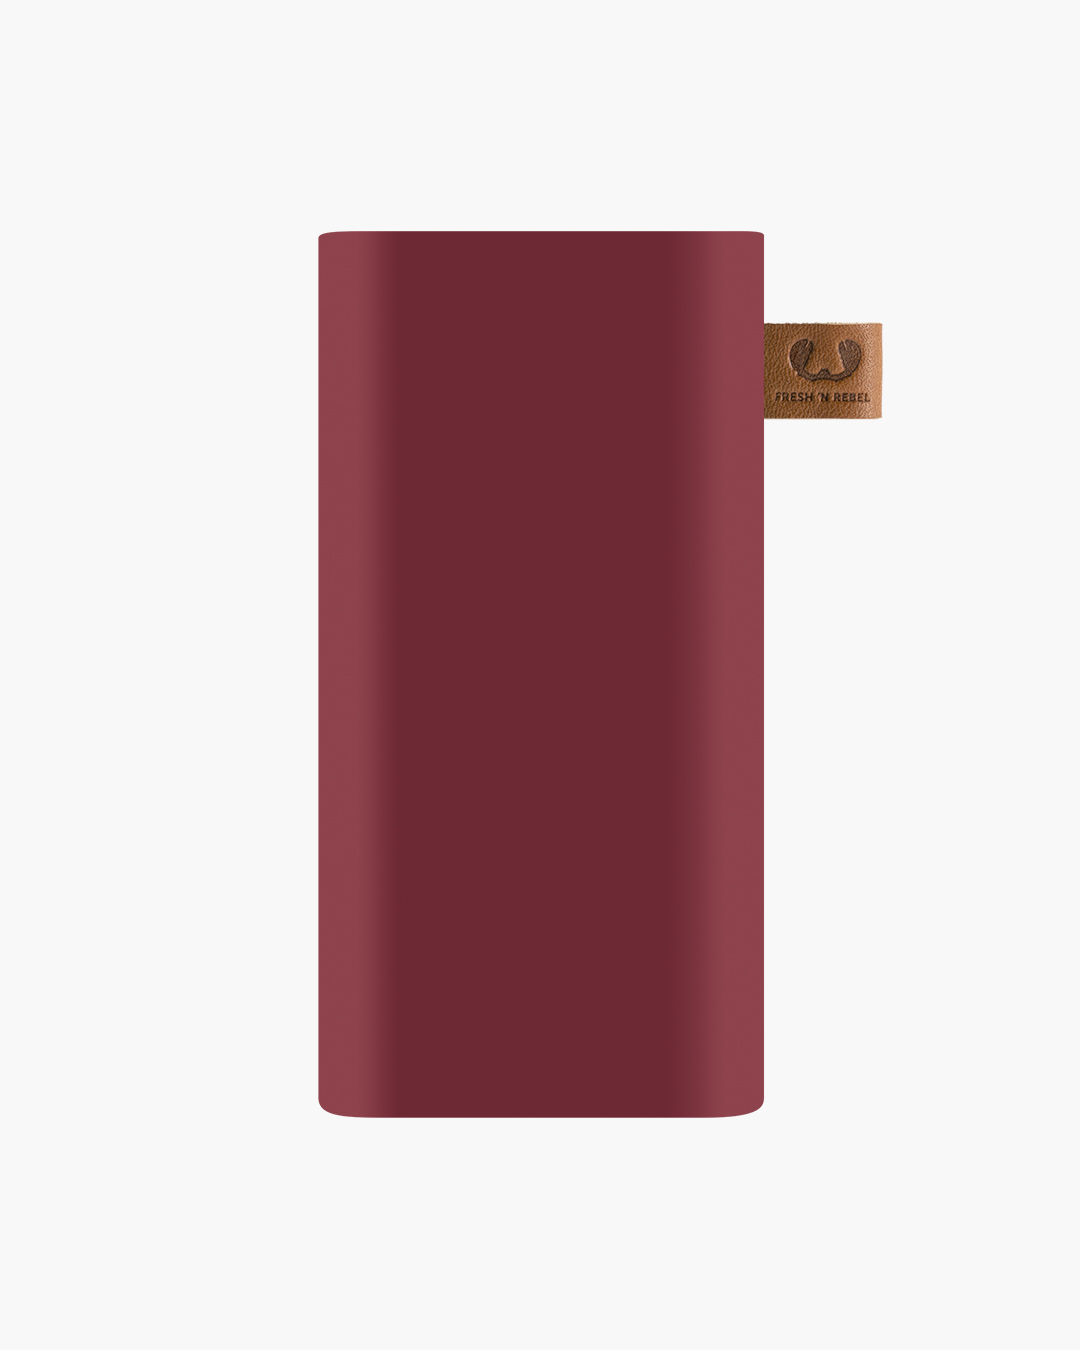 Fresh 'n Rebel - Powerbank 6000 mAh USB-C - Ruby Red